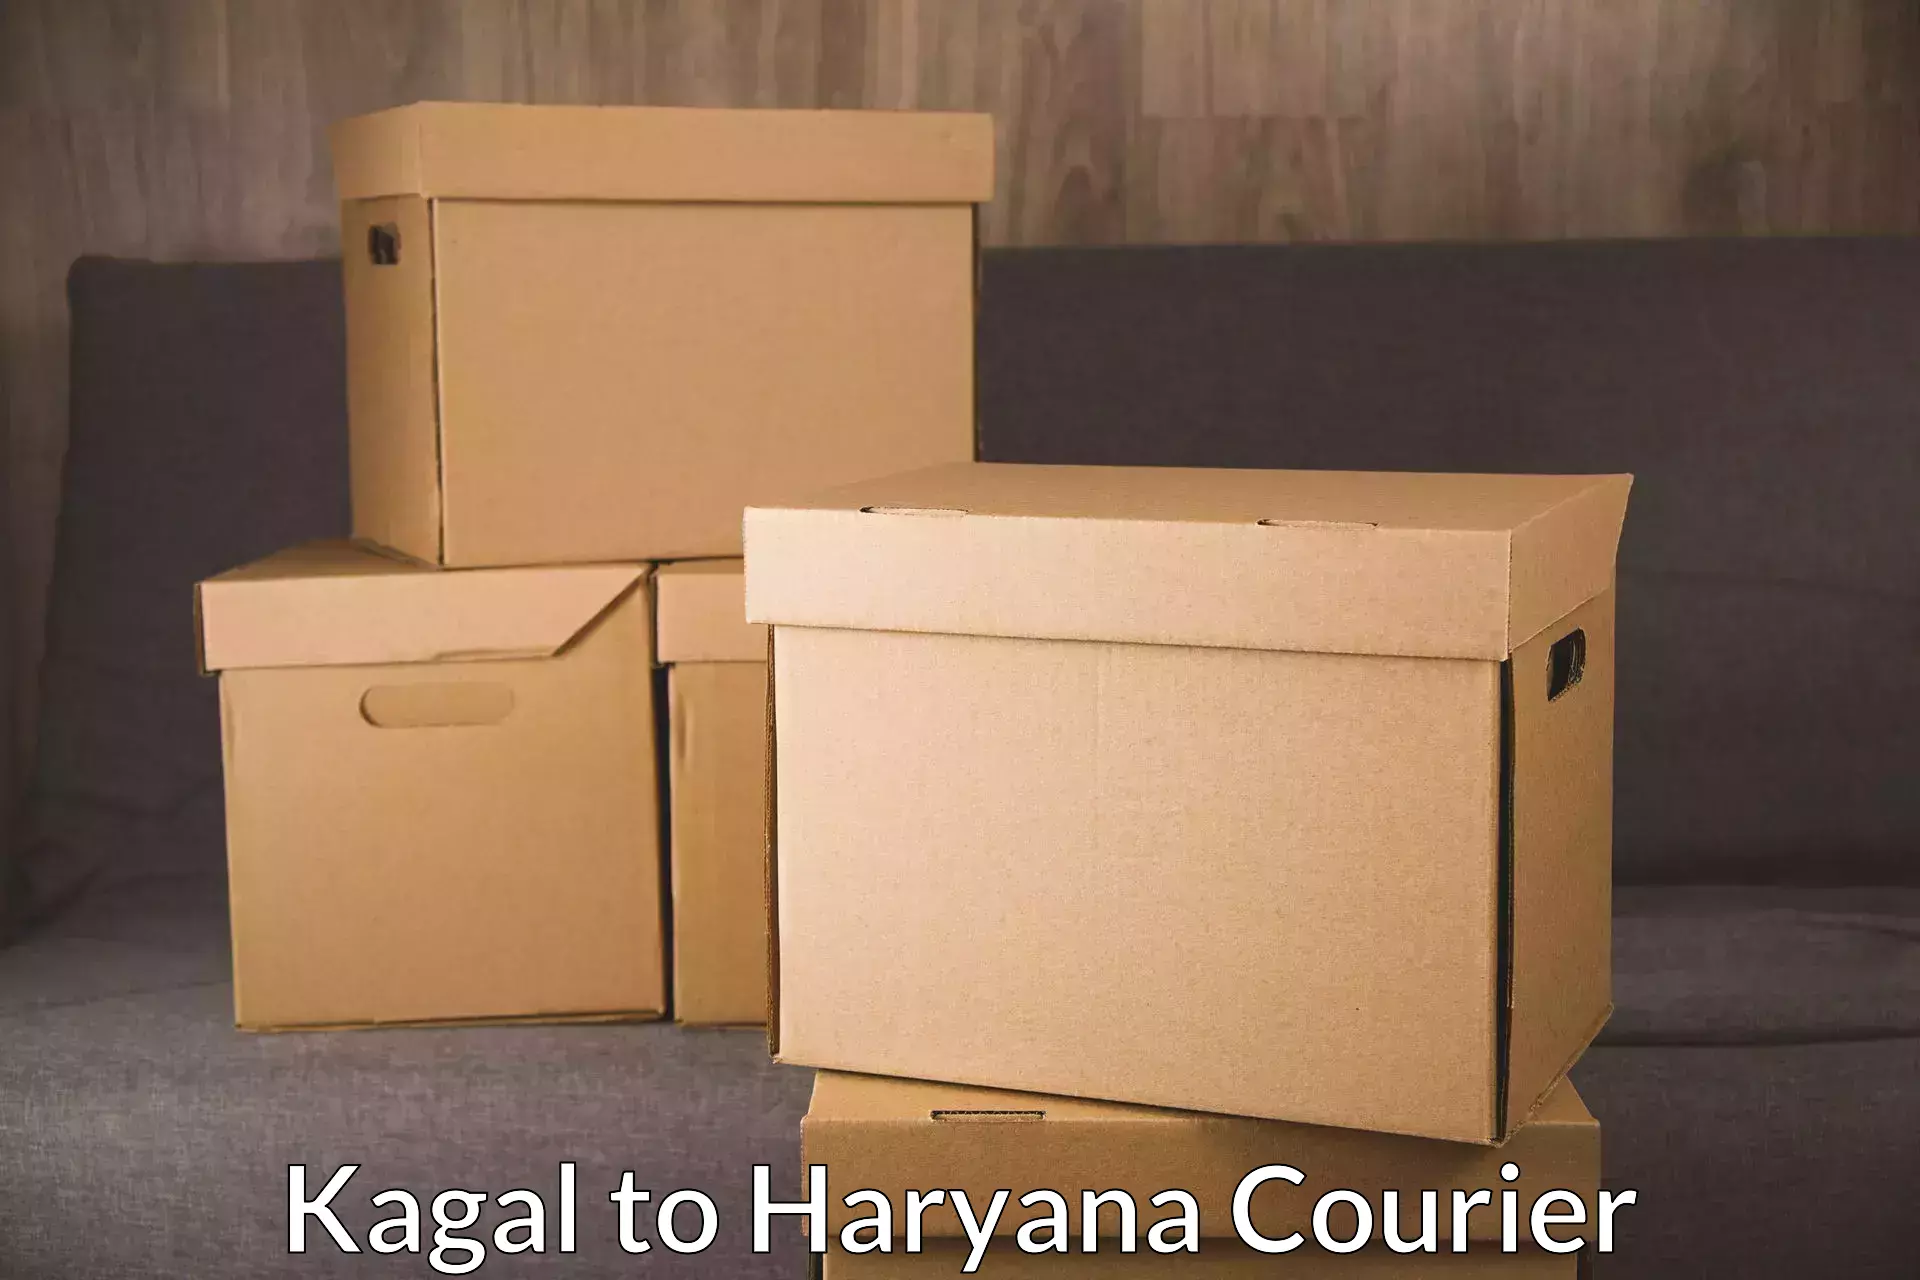 International parcel service Kagal to Haryana